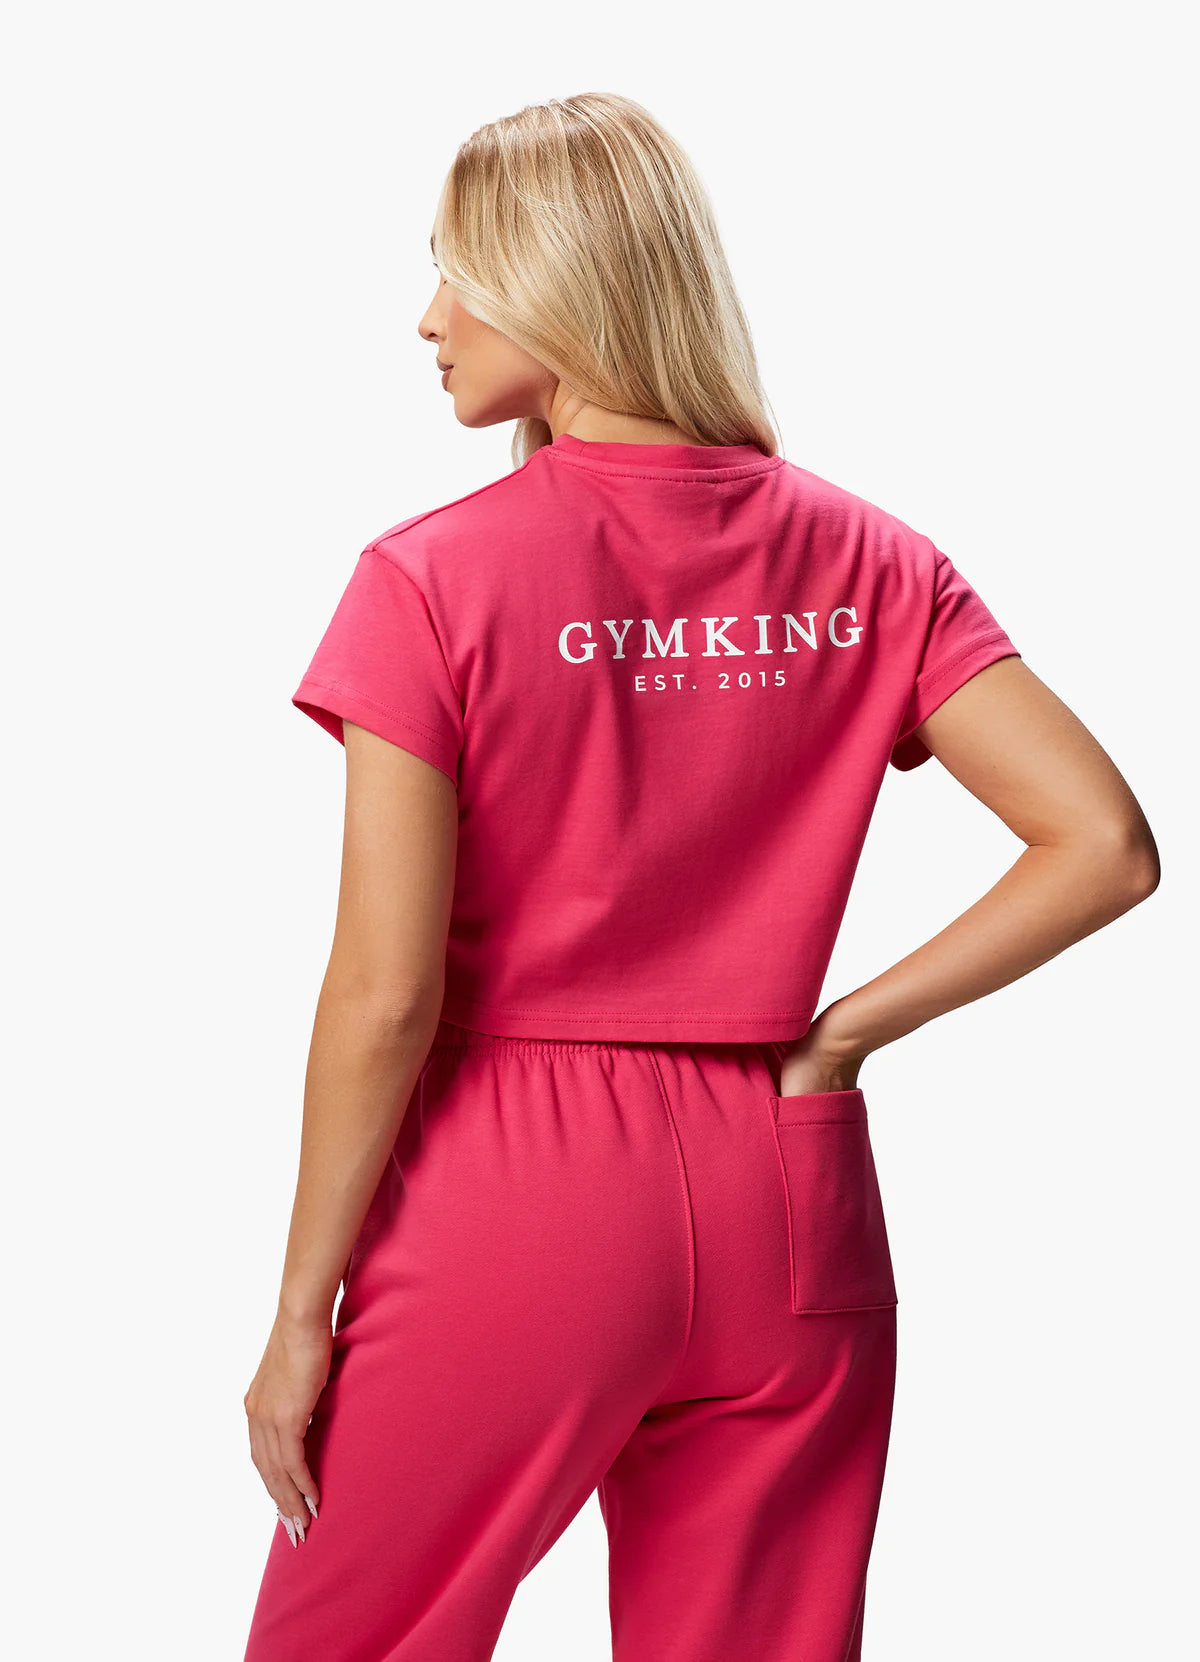 Gym King - Established Cap Sleeve Tee - Raspberry Burst - uptowngirlhu